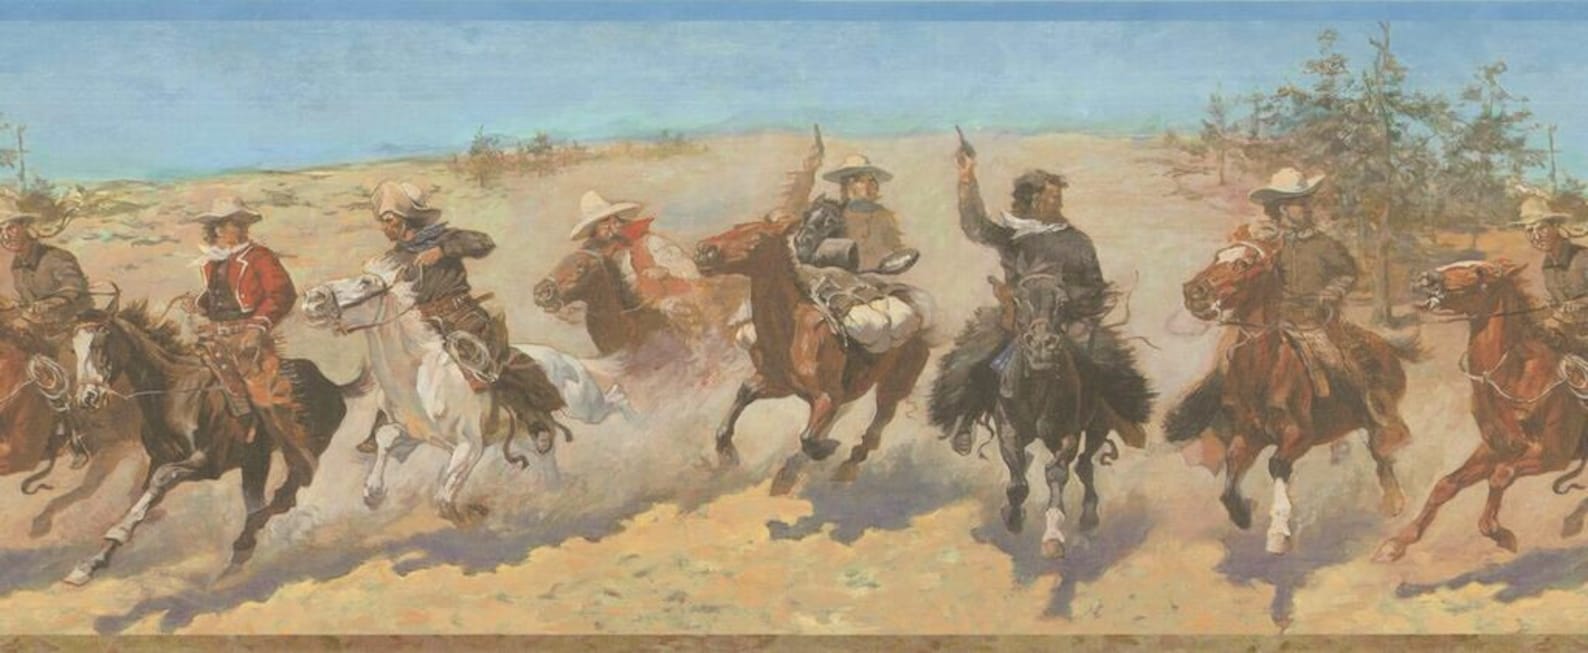 Charging Cowboys Horses Wallpaper Border 259b58371 - Etsy